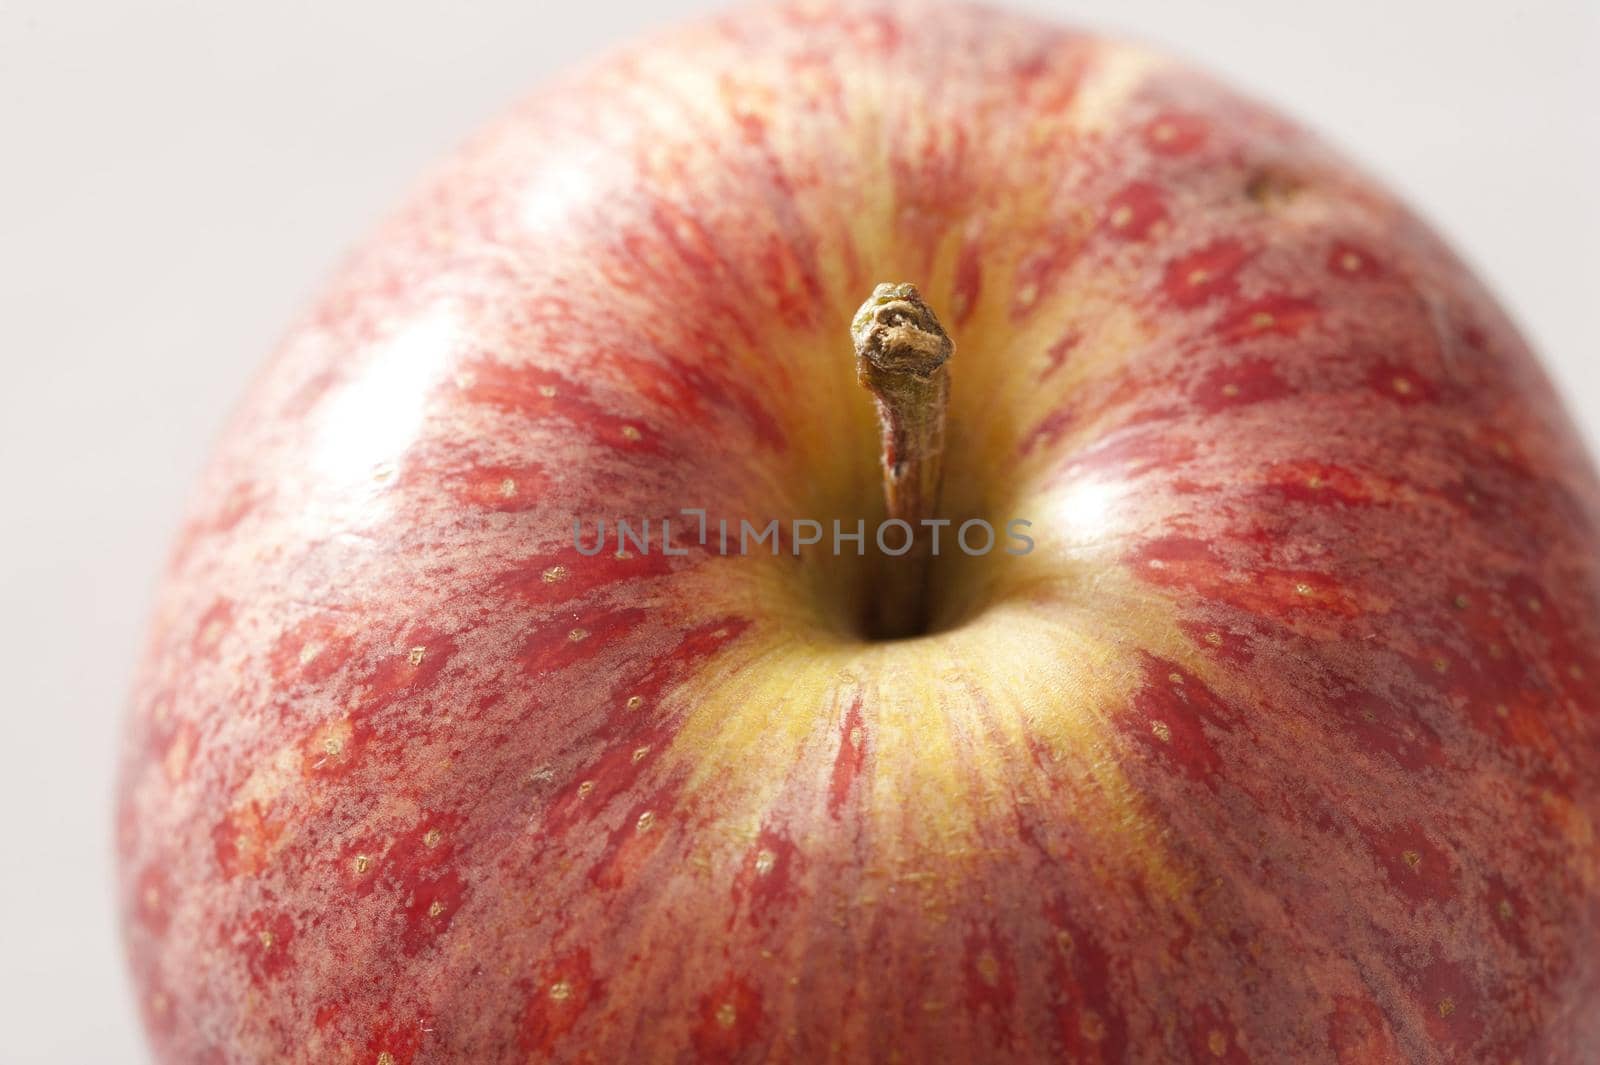 Close-up of fresh red apple. Macro